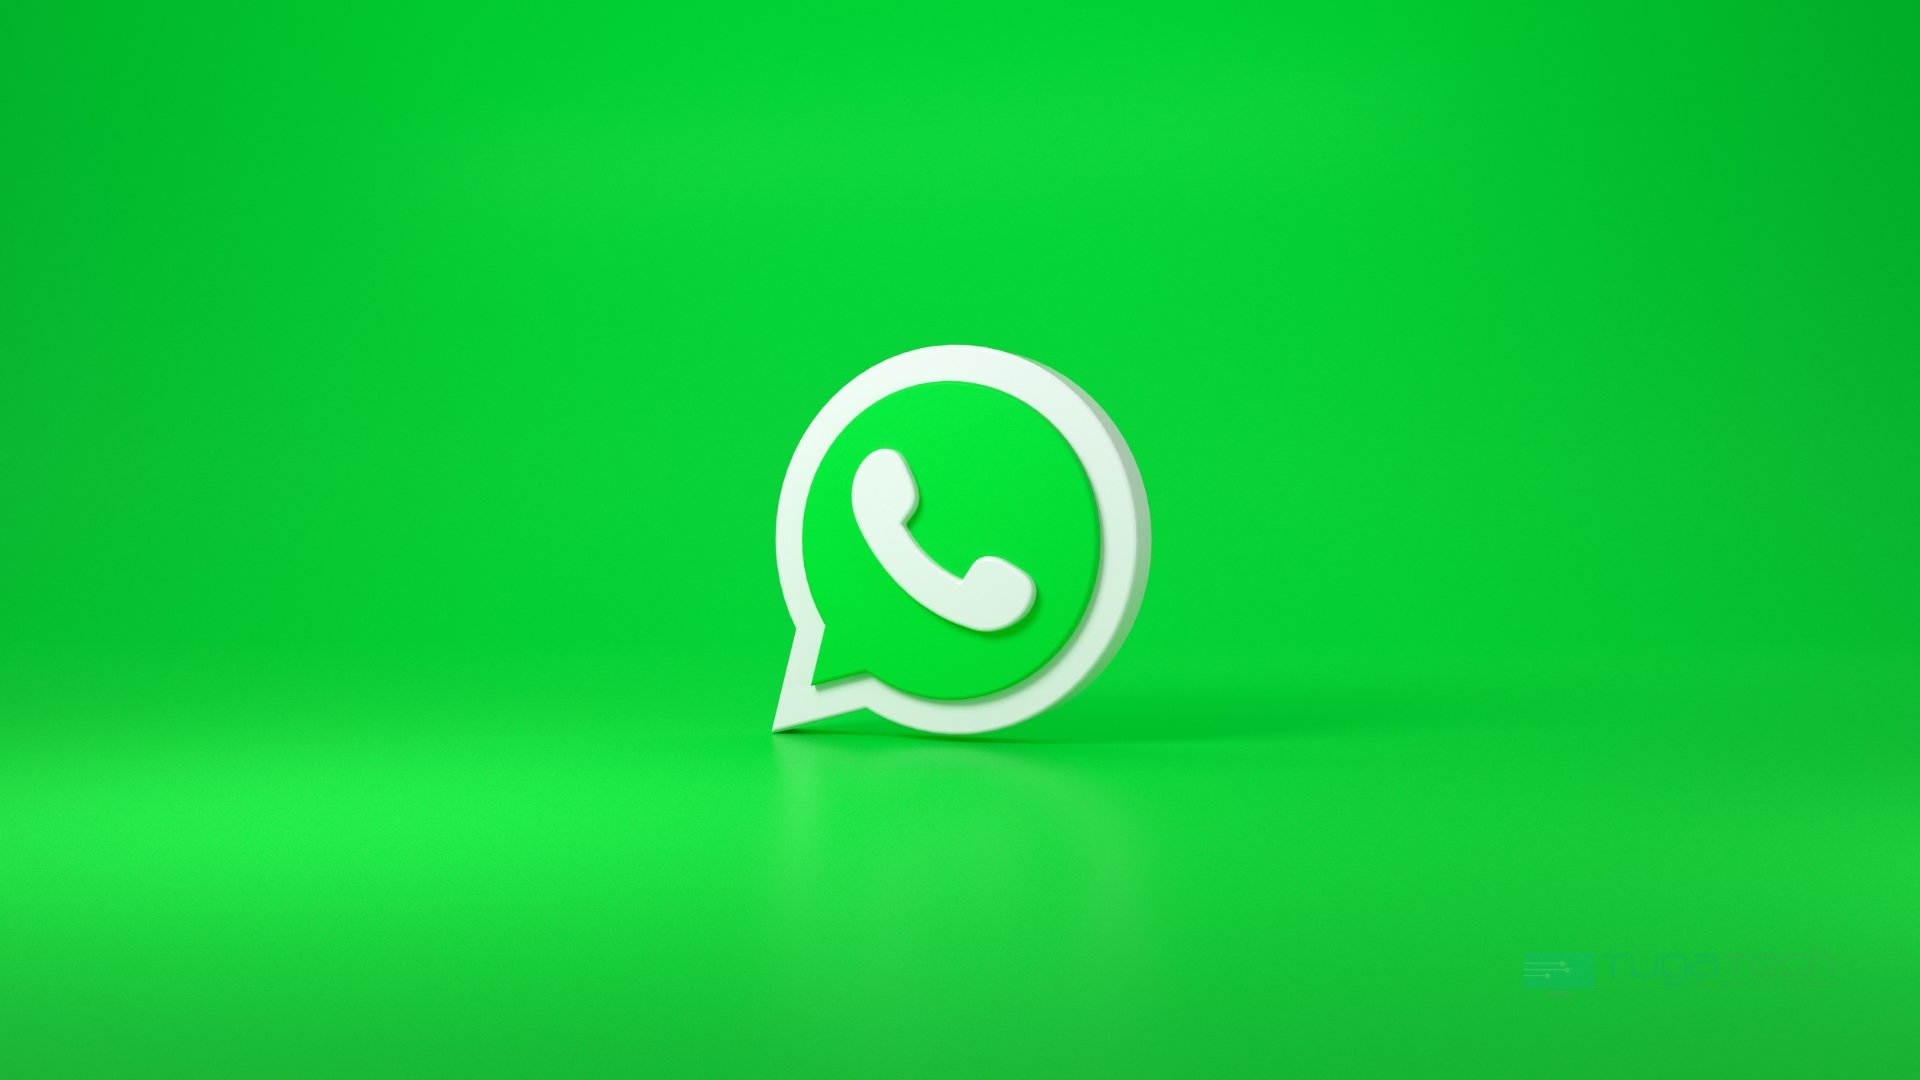 logo do WhatsApp sobre fundo verde